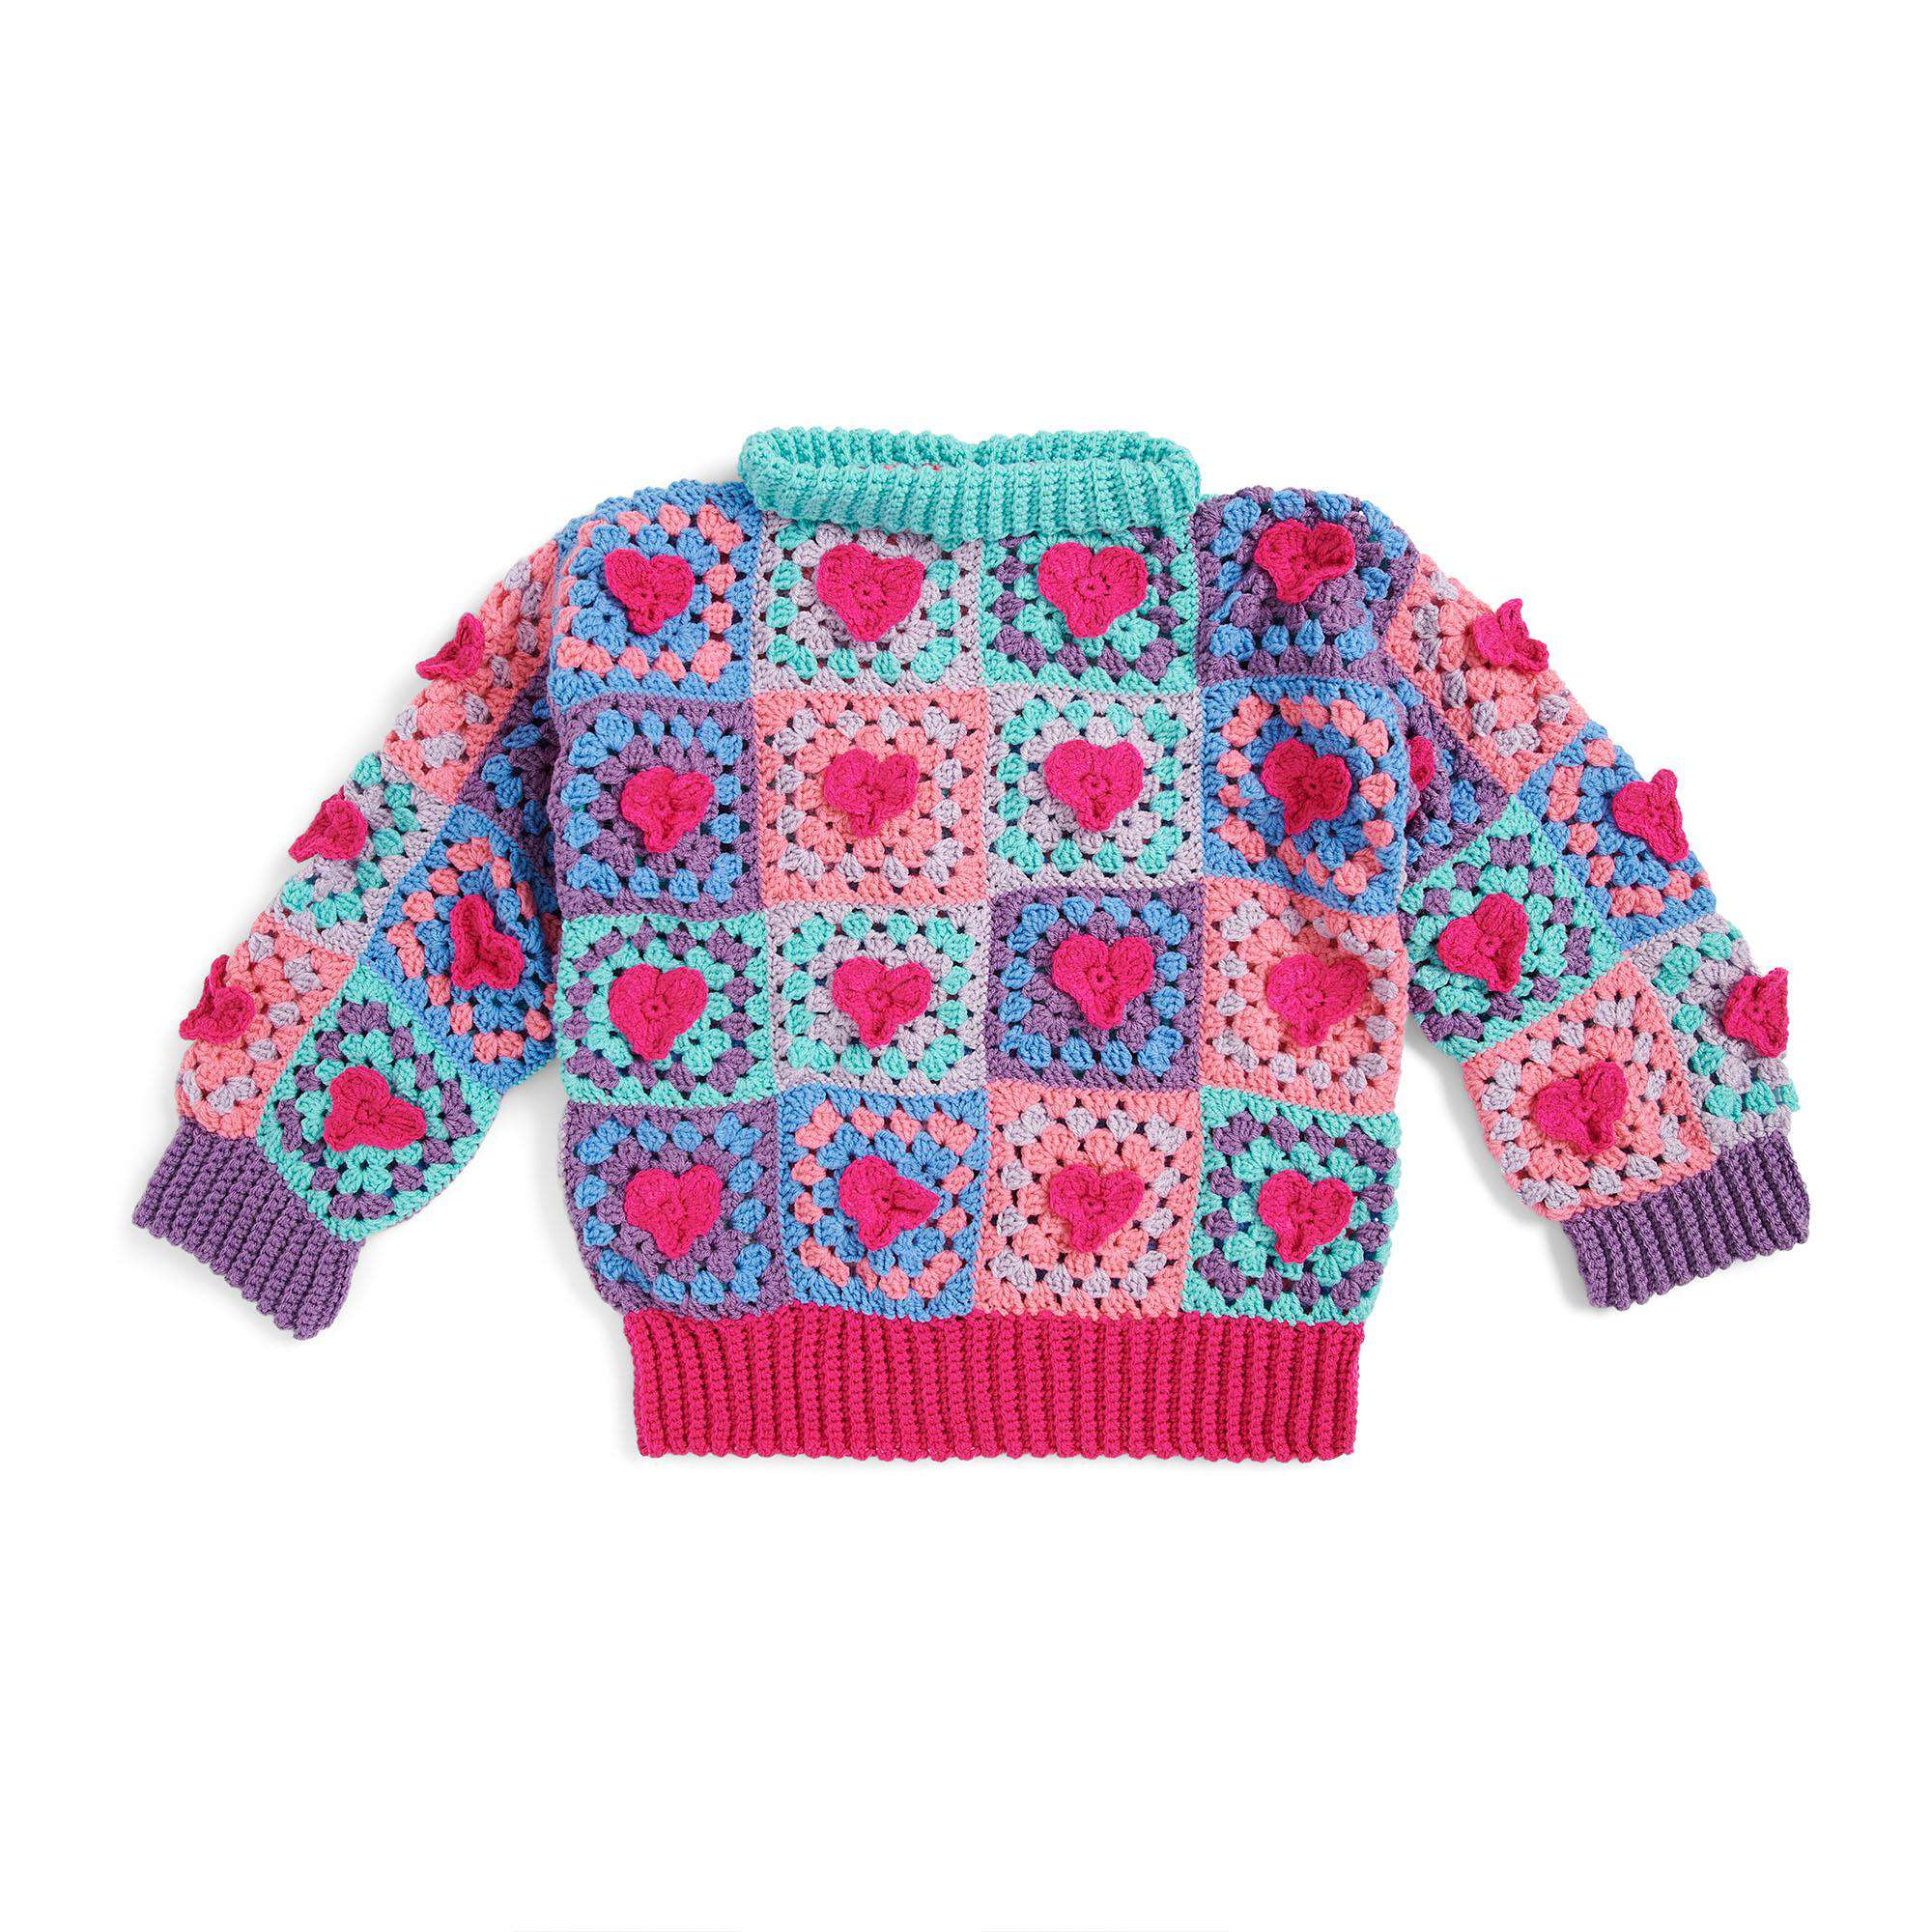 Magical Monogram Jumper Crochet pattern by Yarn Has My Heart